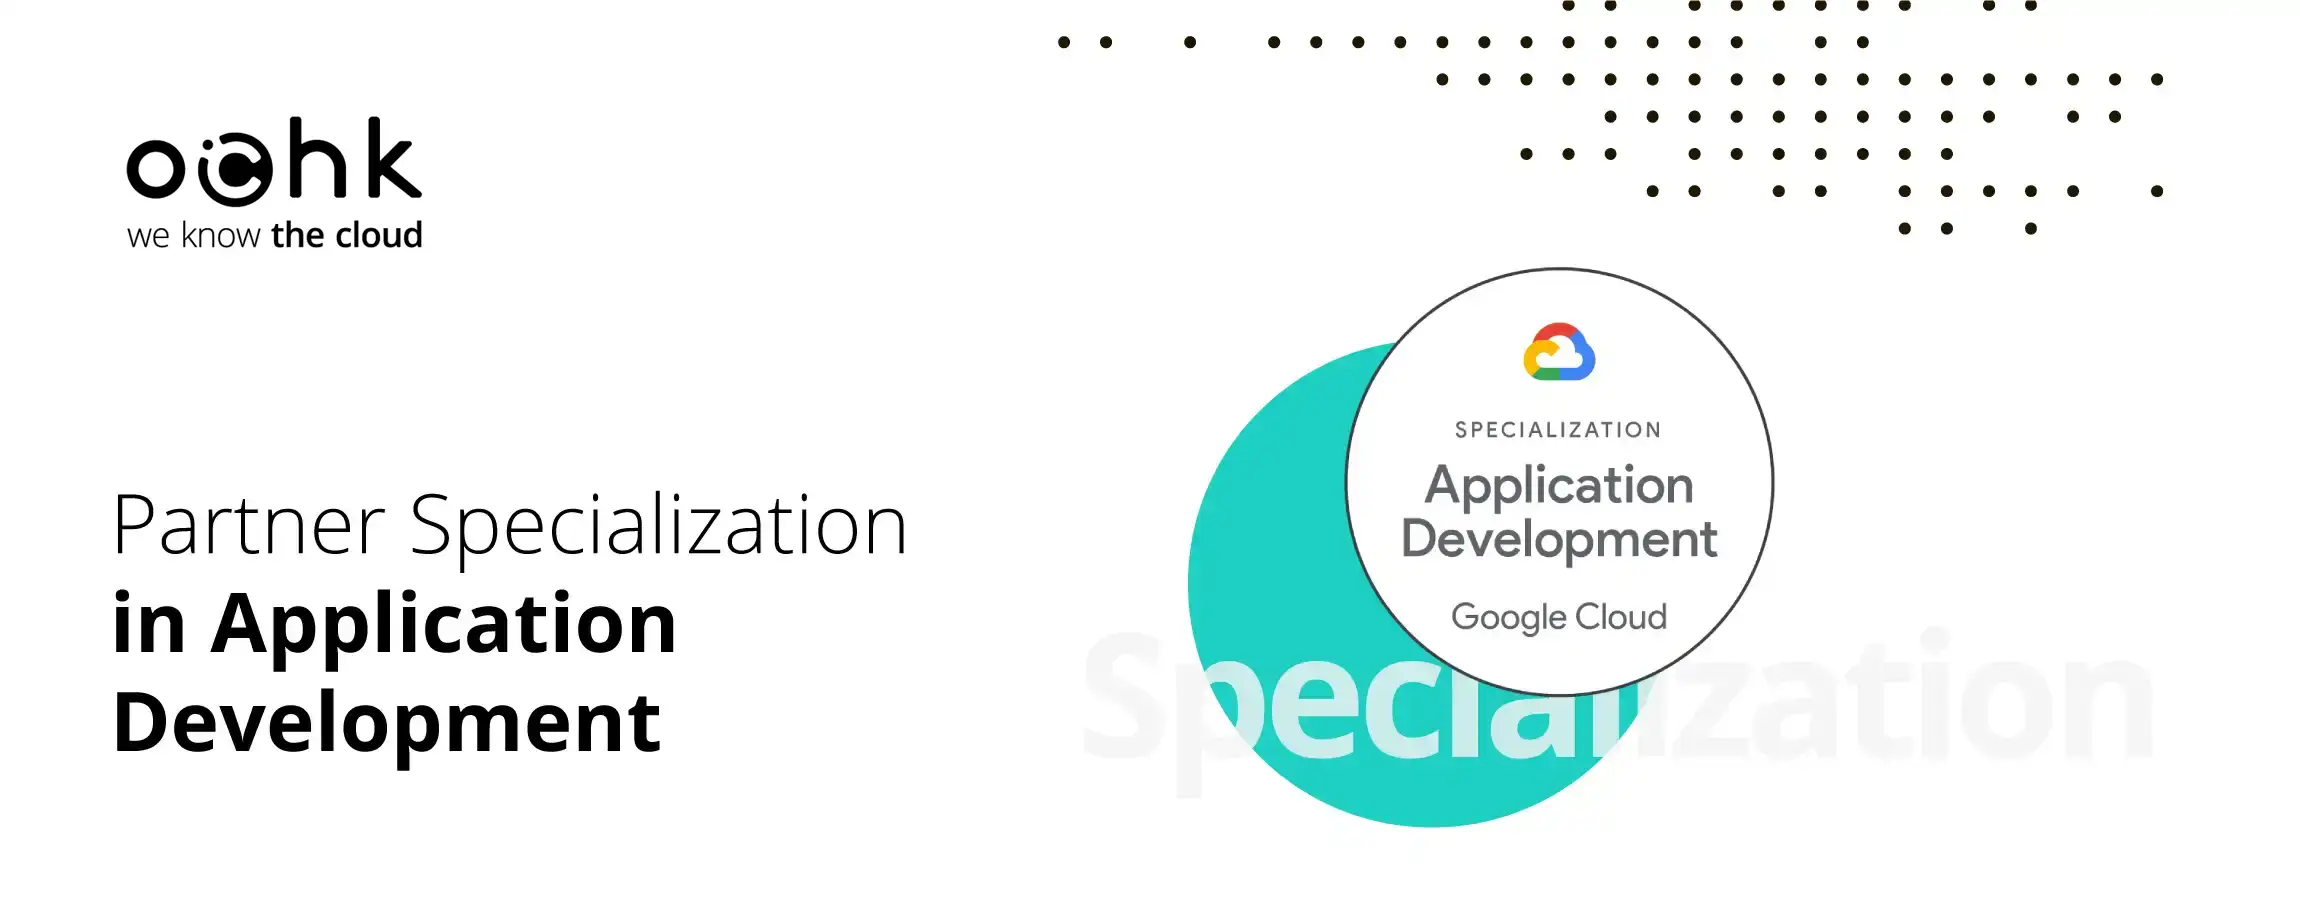 OChK with Application Development Specialization from Google